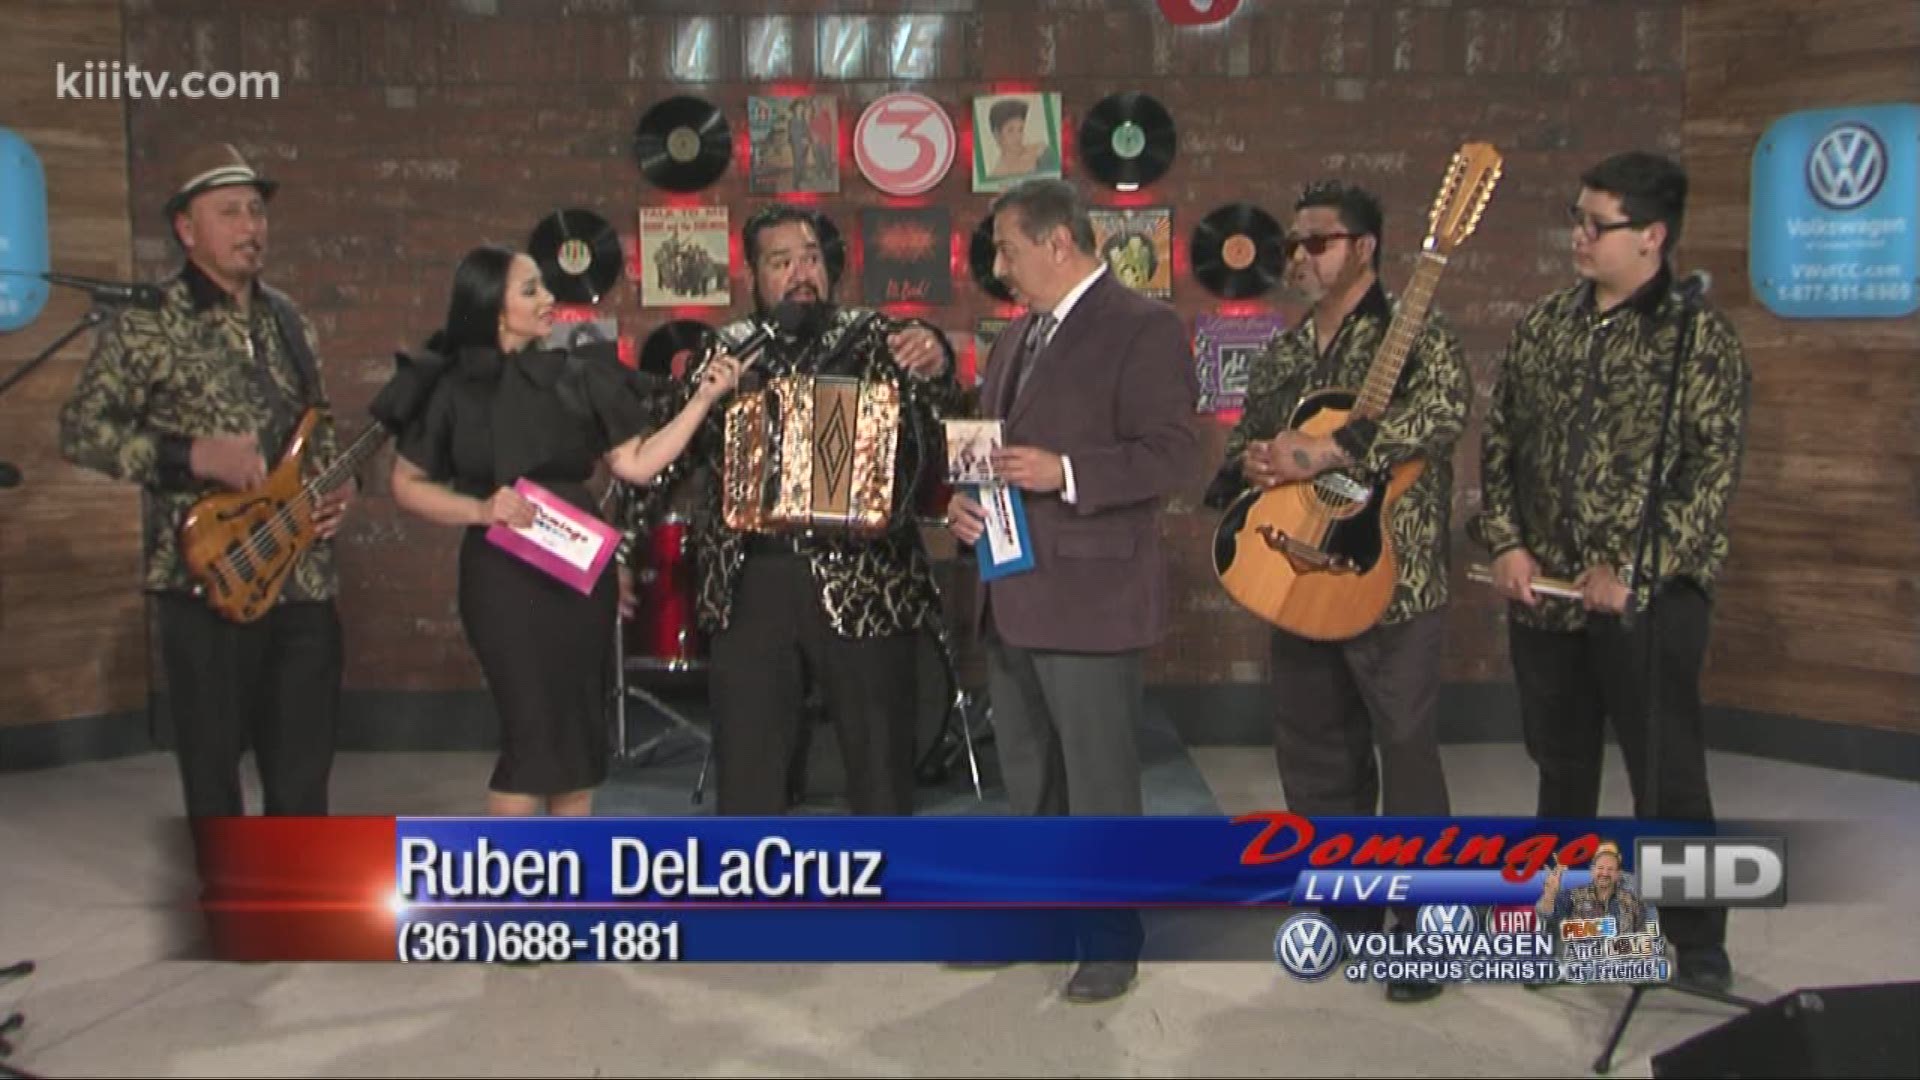 Ruben DeLaCruz Interviewing with Barbi Leo and Rudy Trevino on Domingo Live.